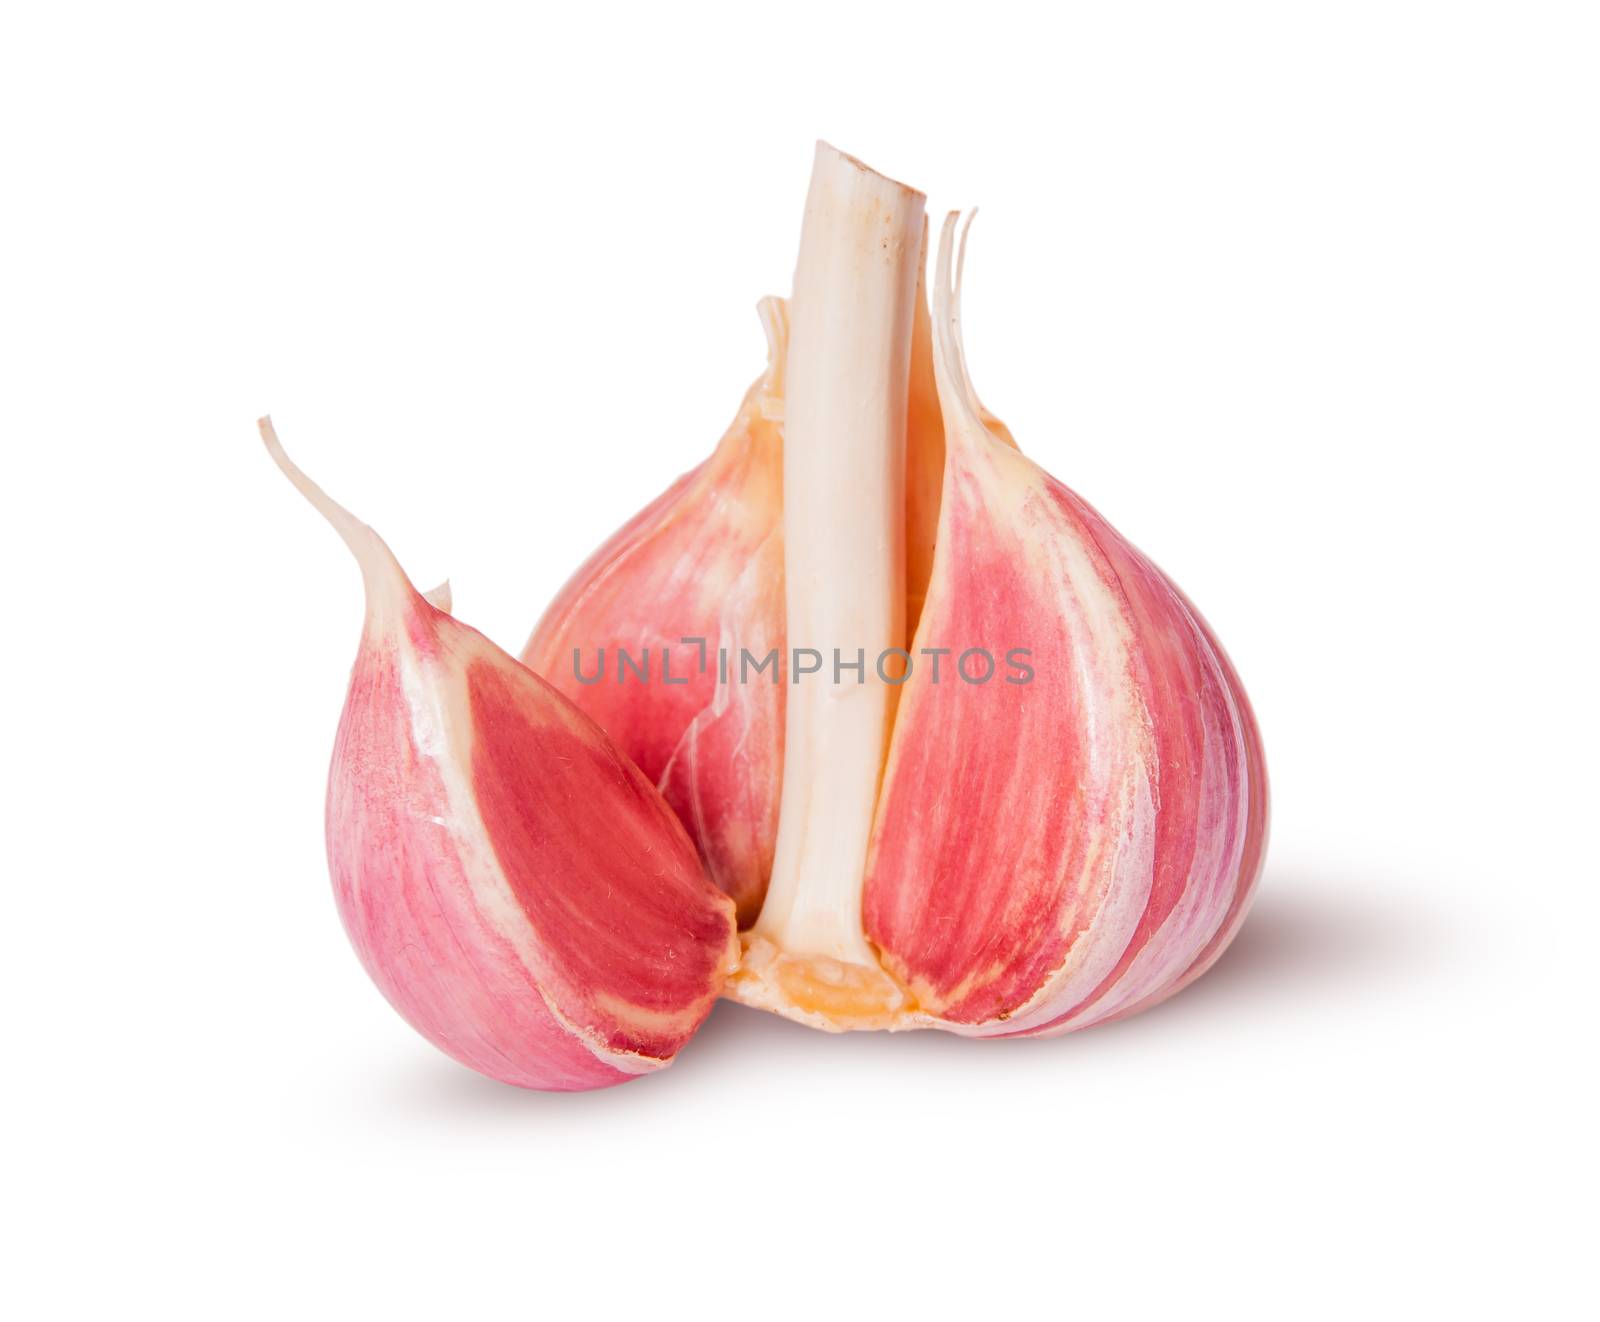 Young fresh garlic by Cipariss